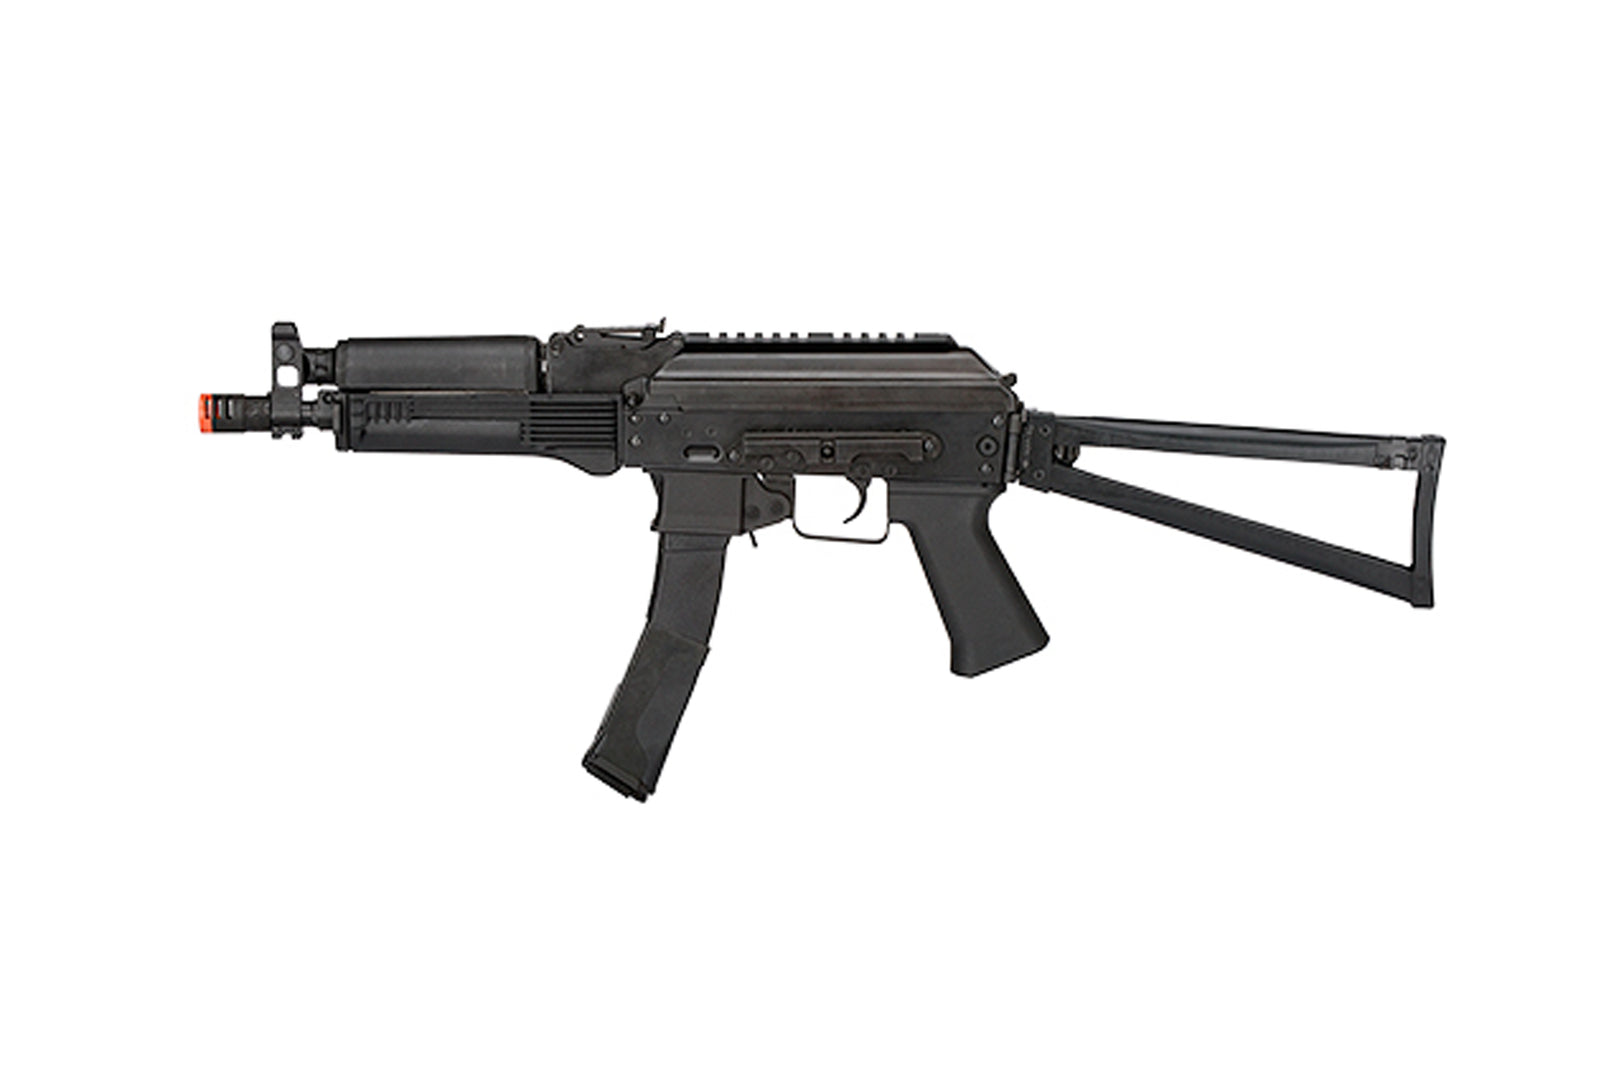 LCT VITYAZ STEEL PP-19-01 AEG AIRSOFT SUBMACHINE GUN - BLACK